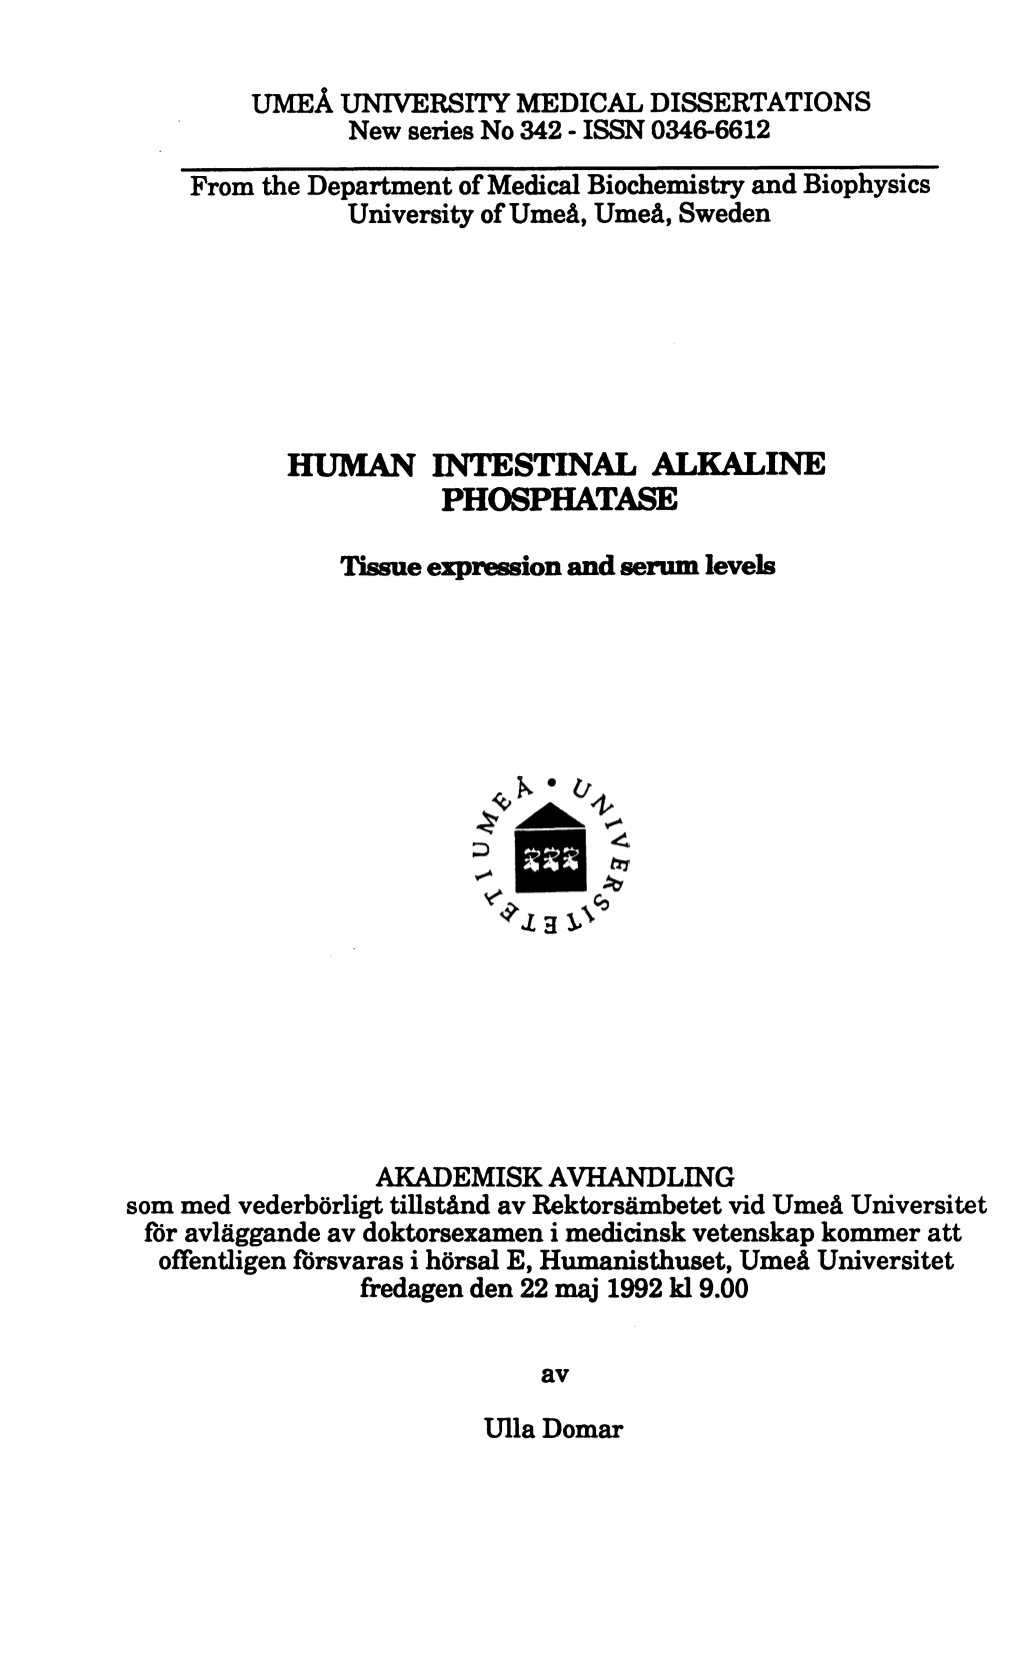 Human Intestinal Alkaline Phosphatase